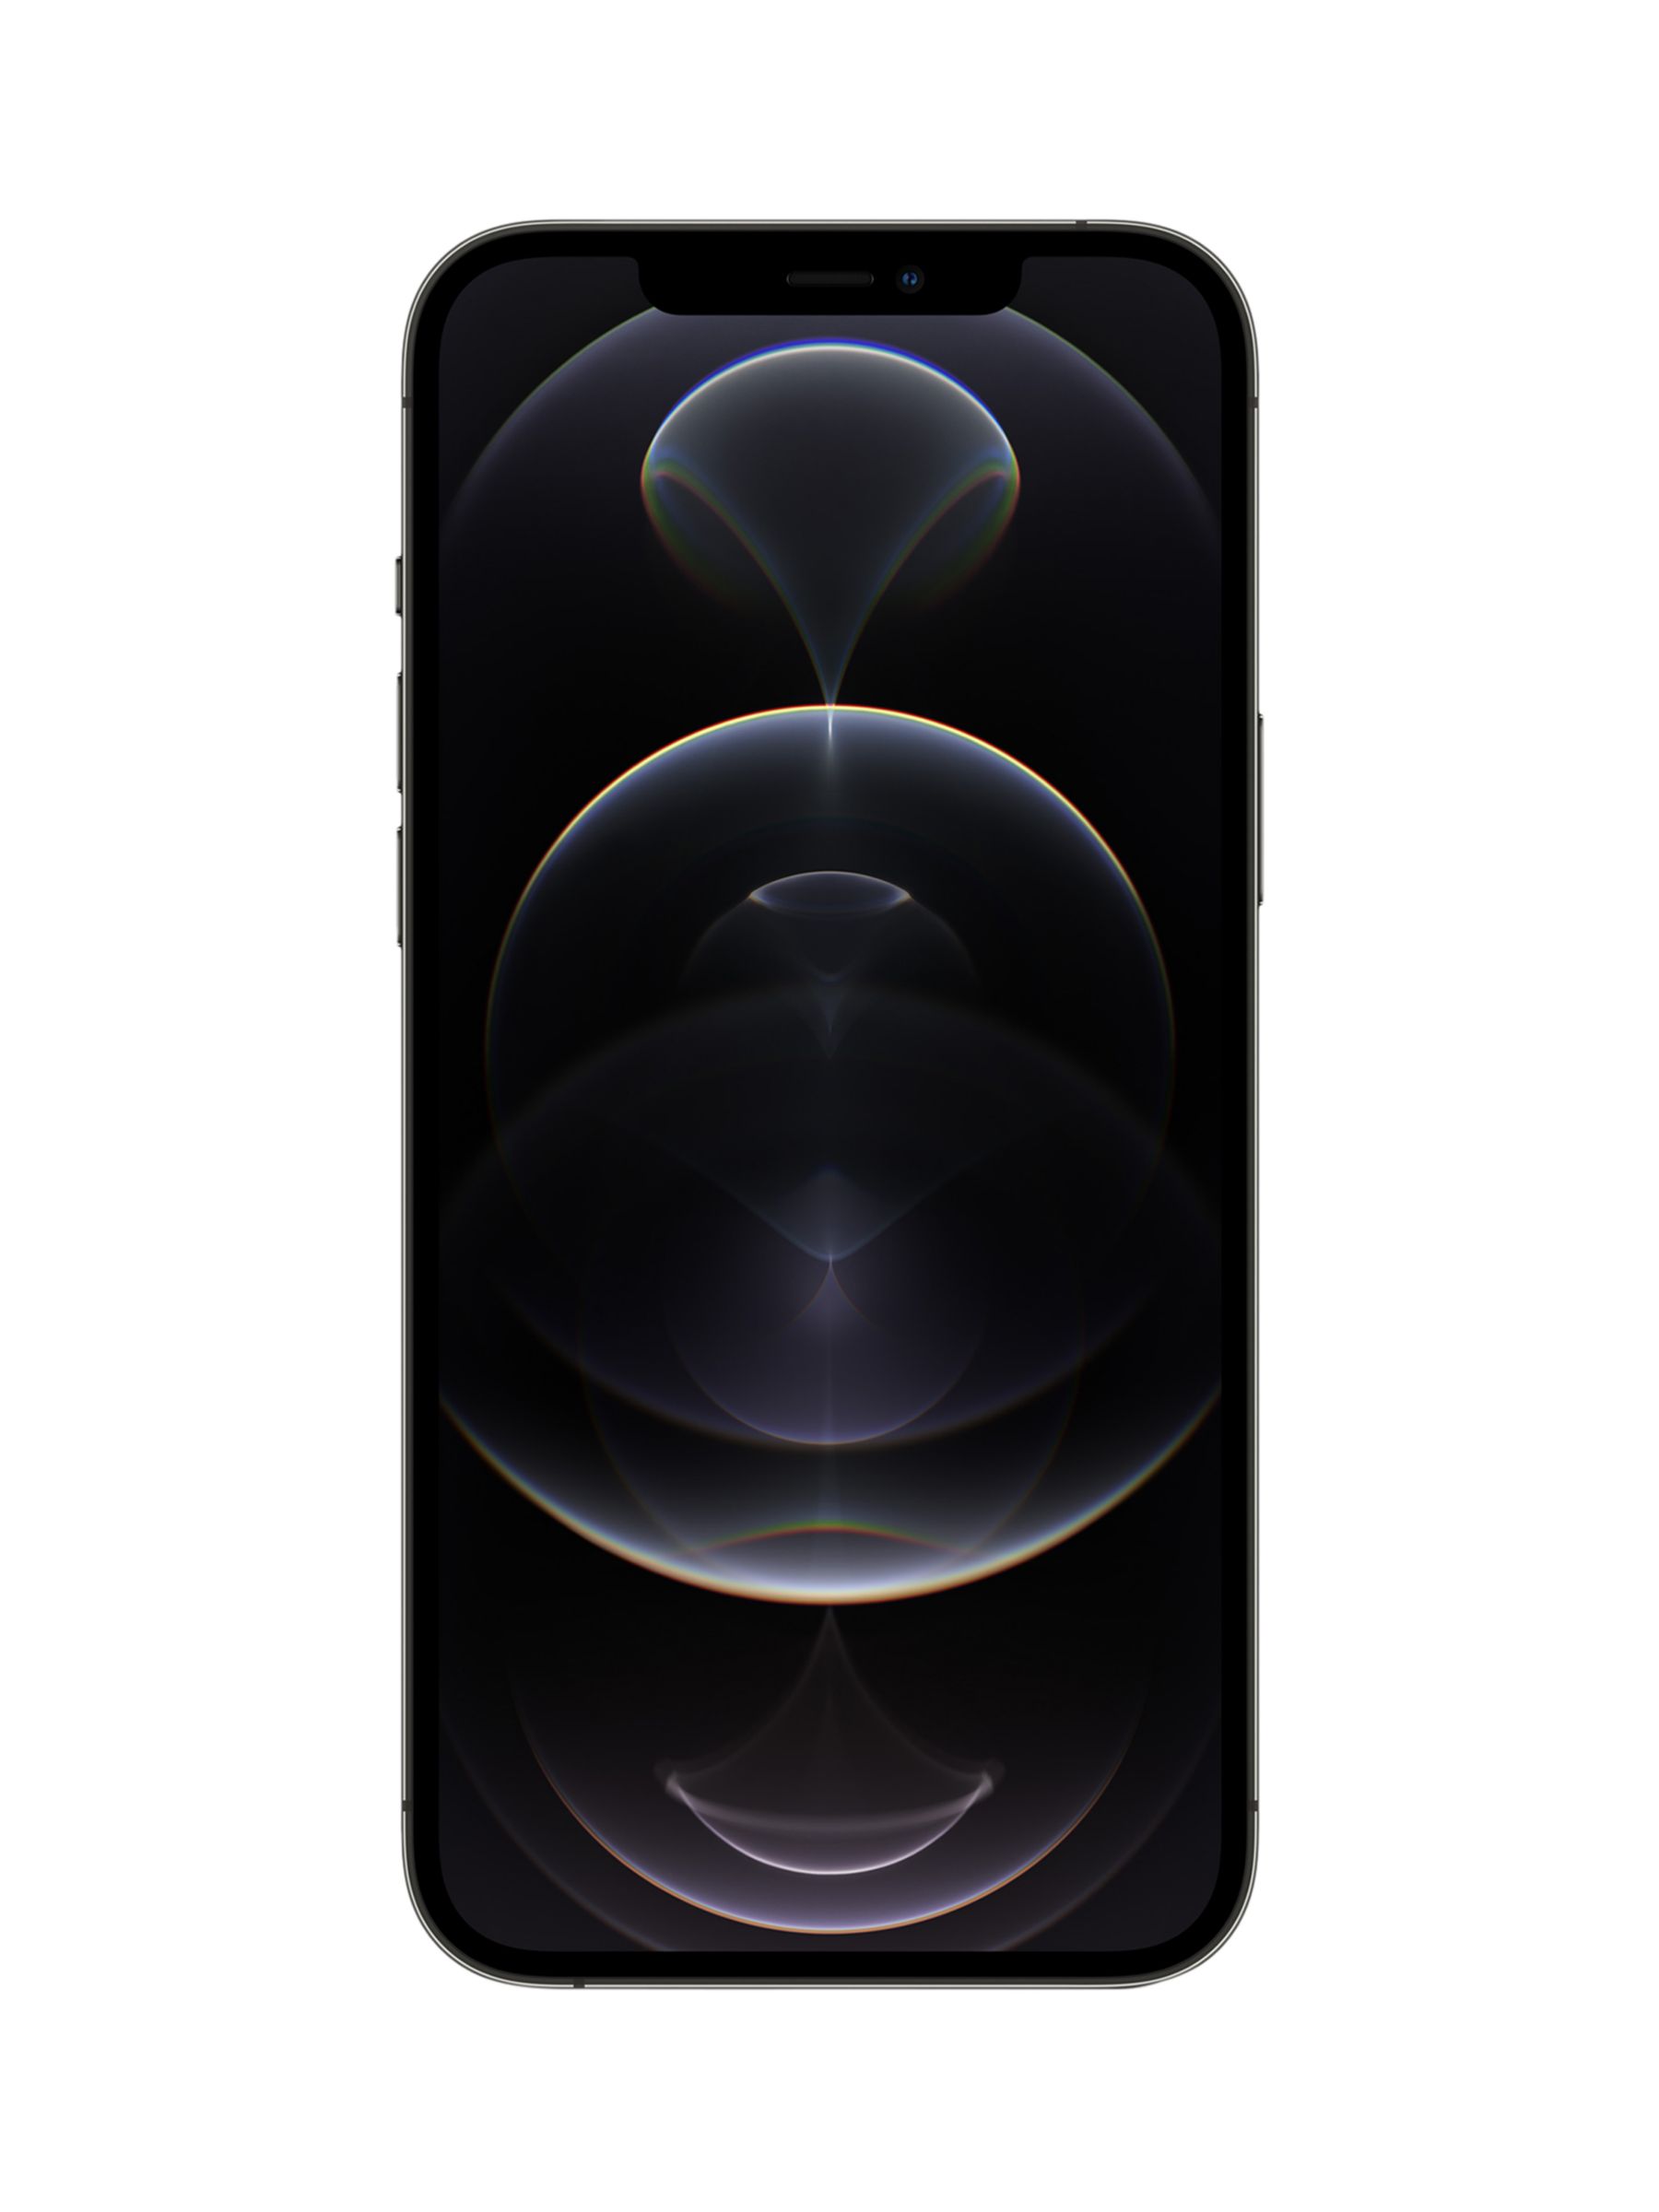 Apple Iphone 12 Pro Max Ios 6 7 5g Sim Free 256gb At John Lewis Partners